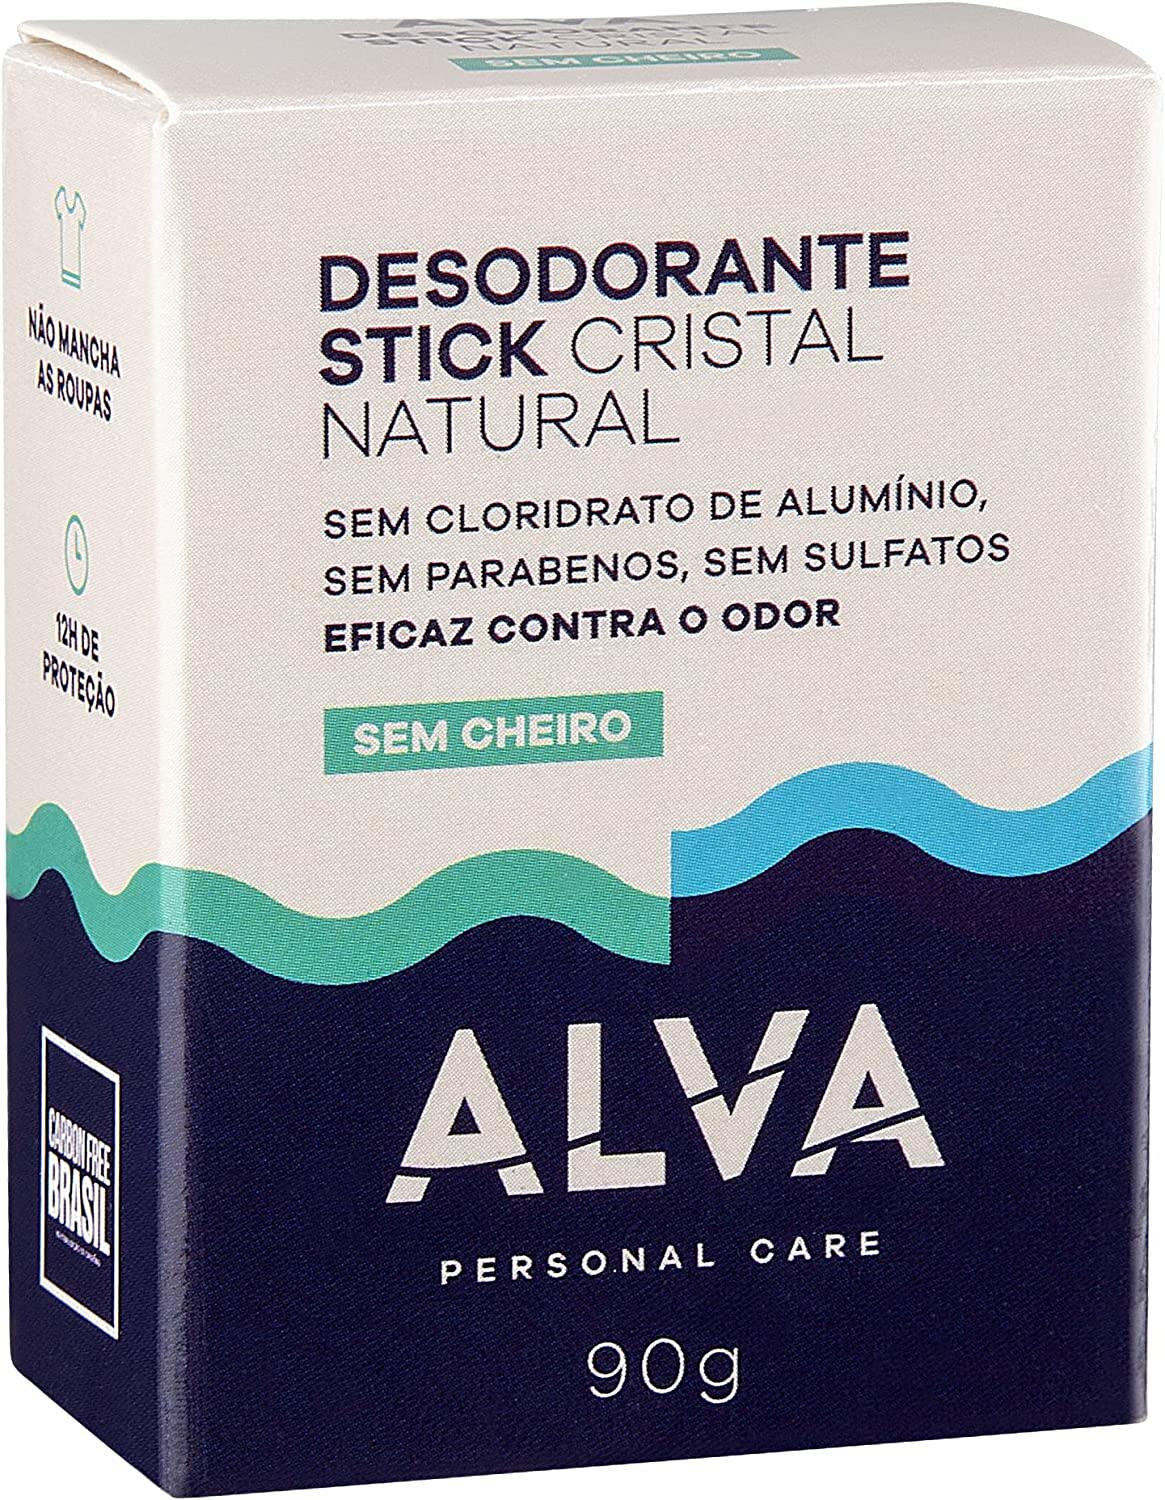 Desodorante Cristal Natural 90g Refil - Alva